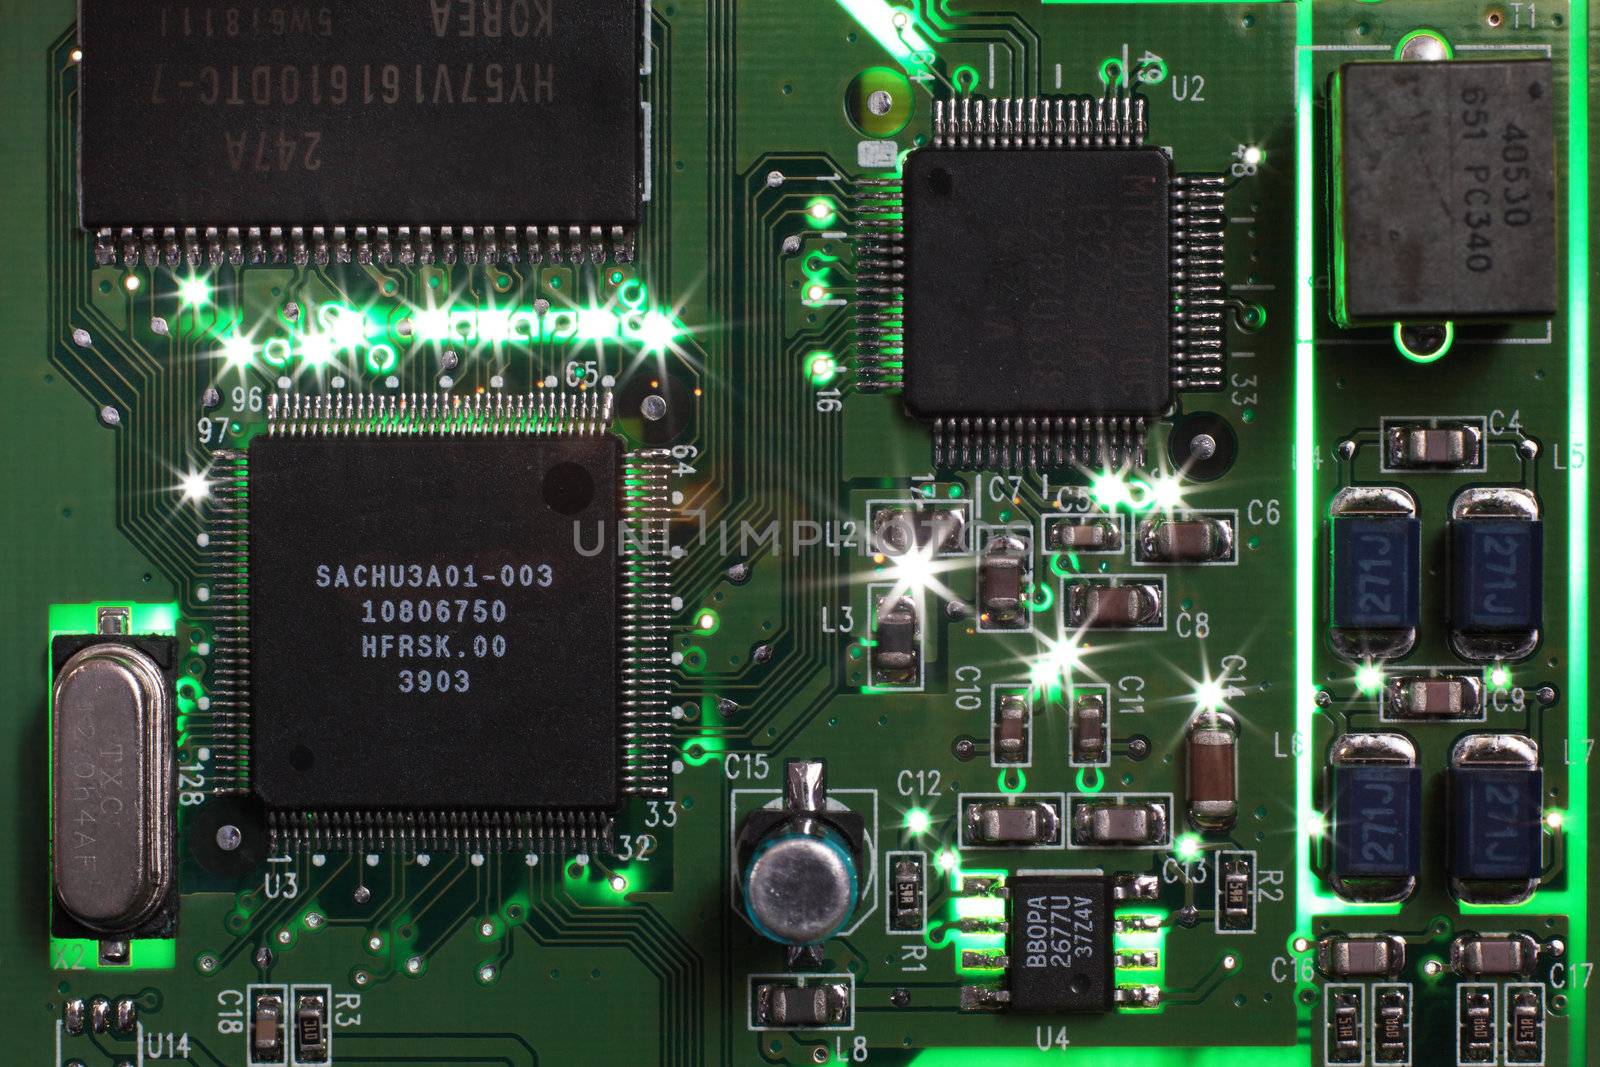 Glowing printed circuit board macro detail